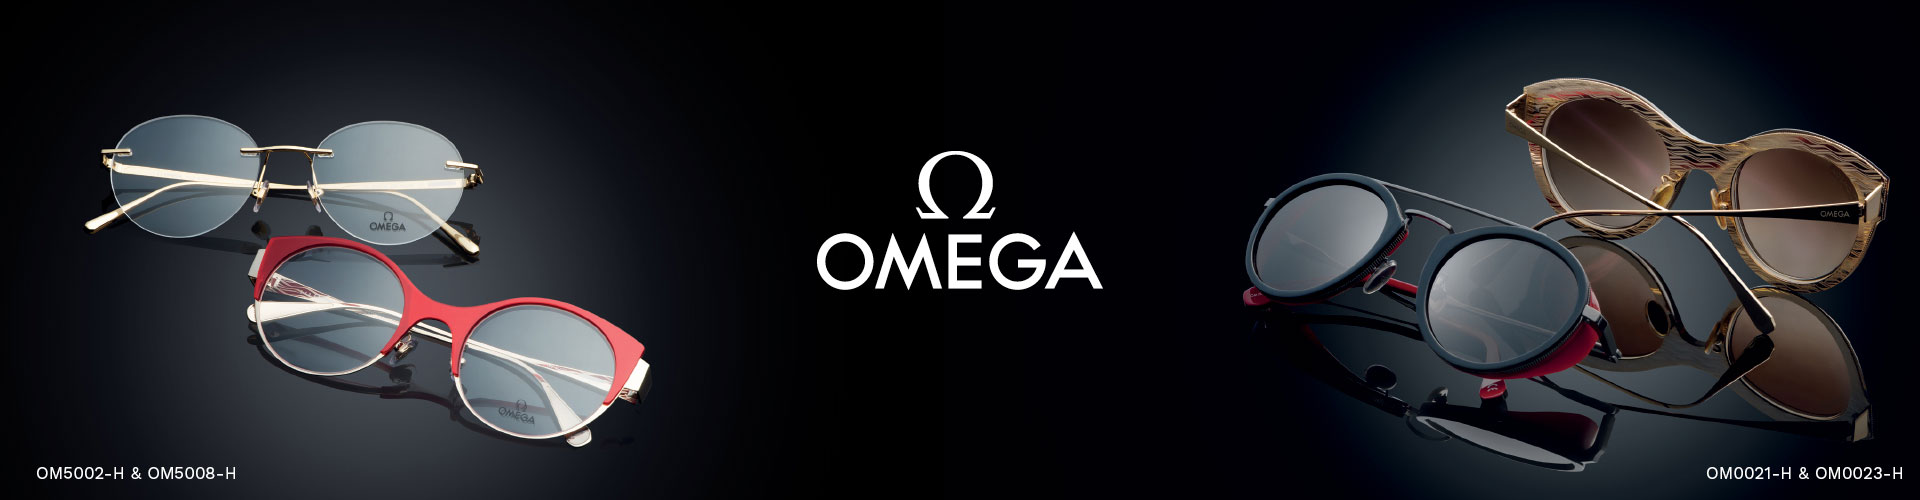 Shop Omega Sunglasses - featuring OM0021-H